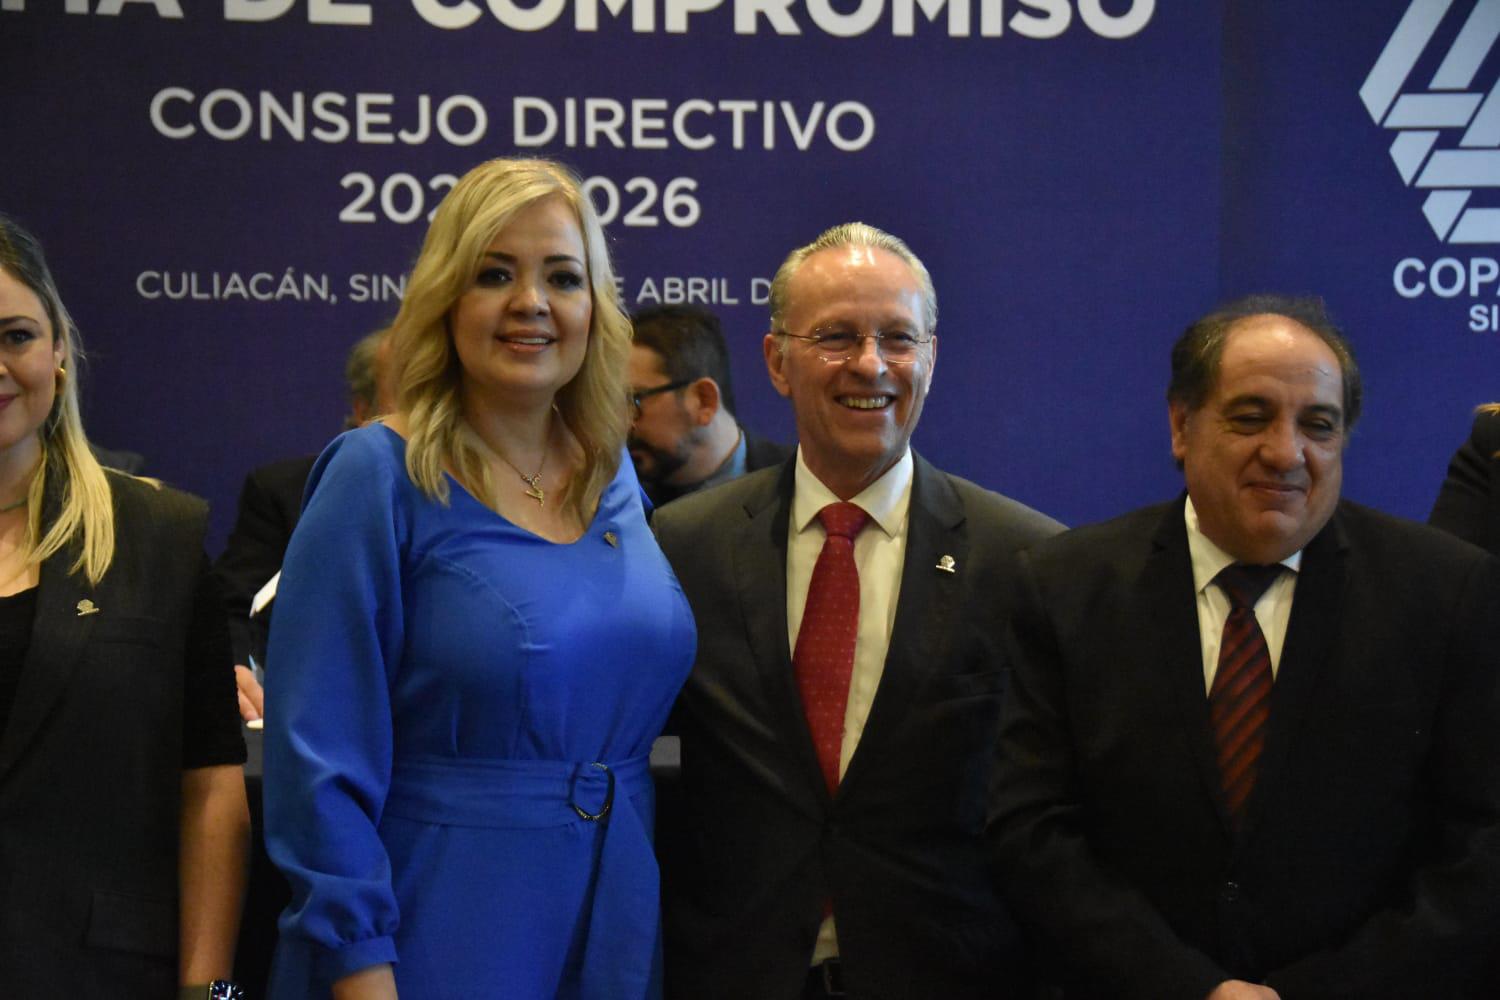 $!Martha Elena Reyes Zazueta asume la presidencia de Coparmex Sinaloa